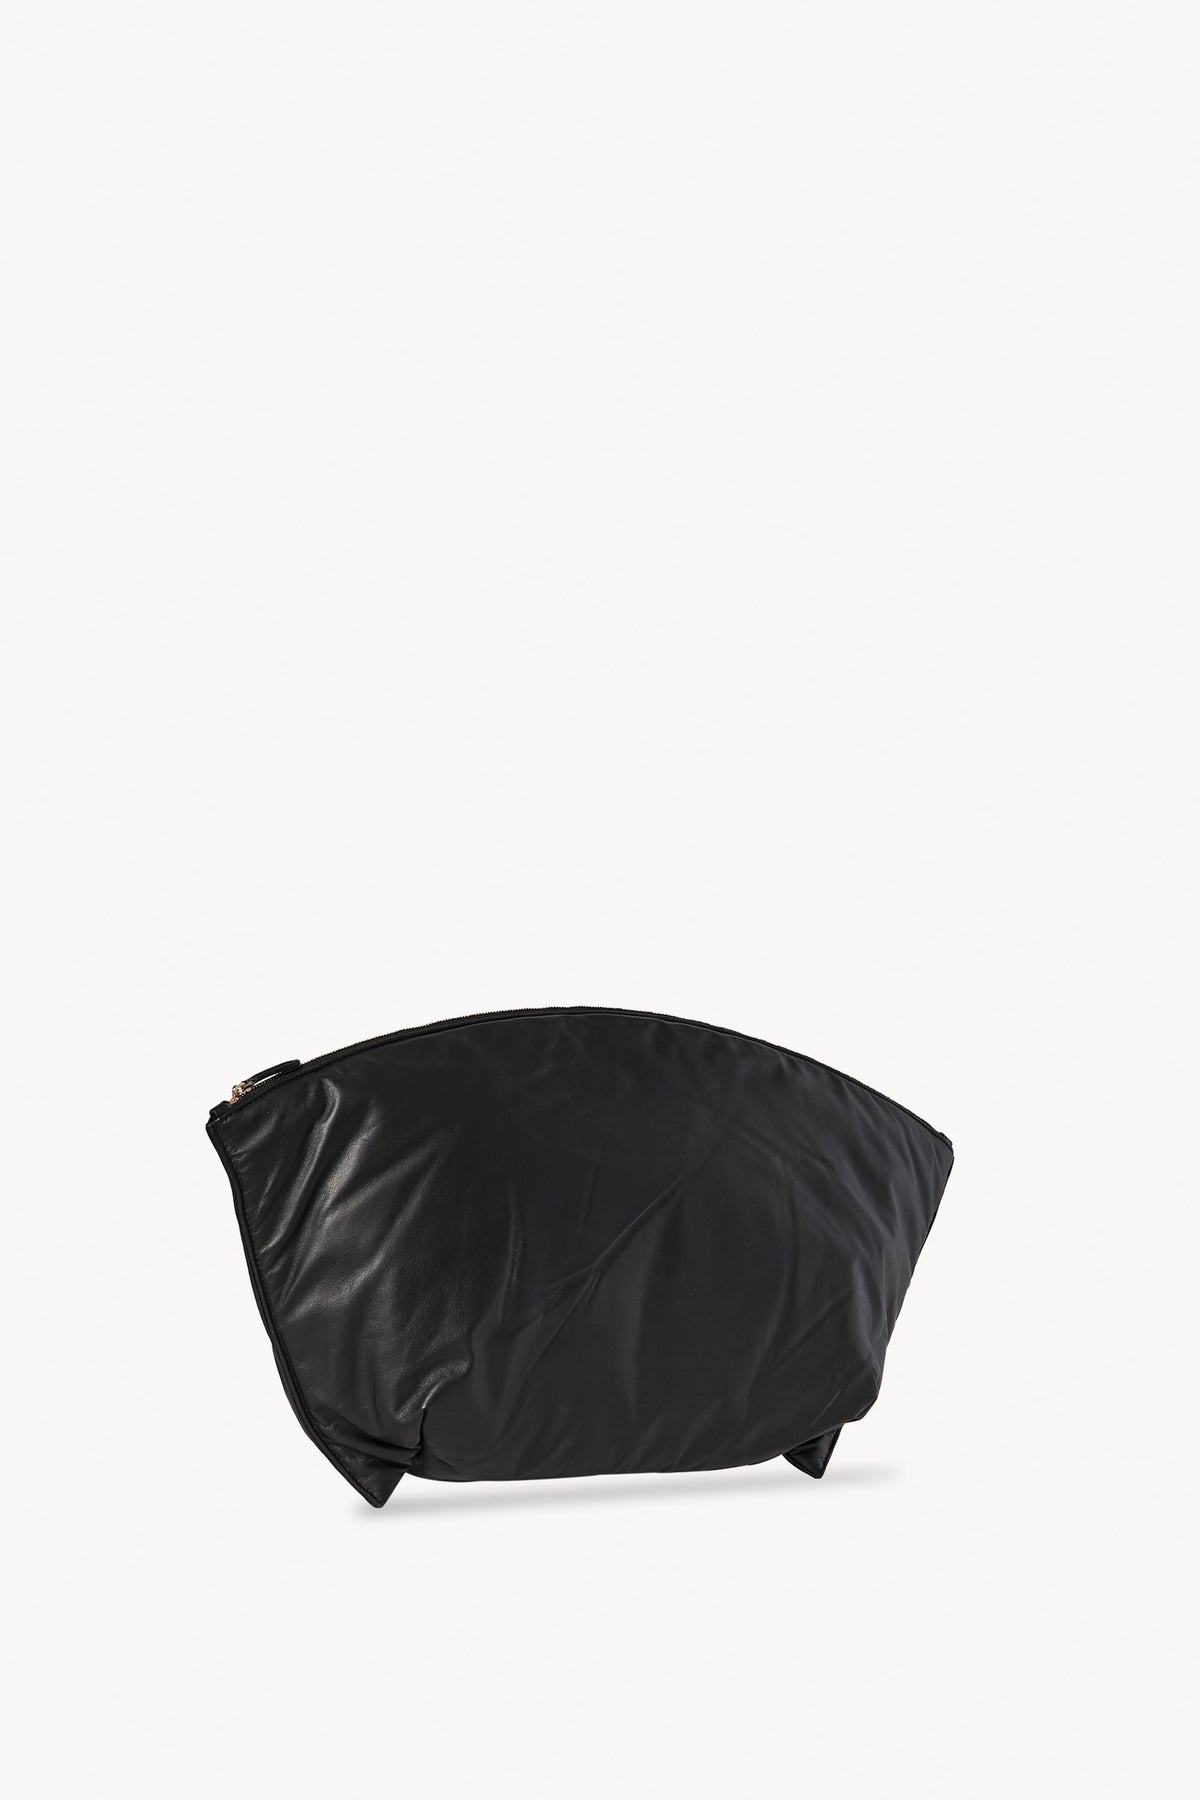 XL Dante Clutch Black Leather – Row